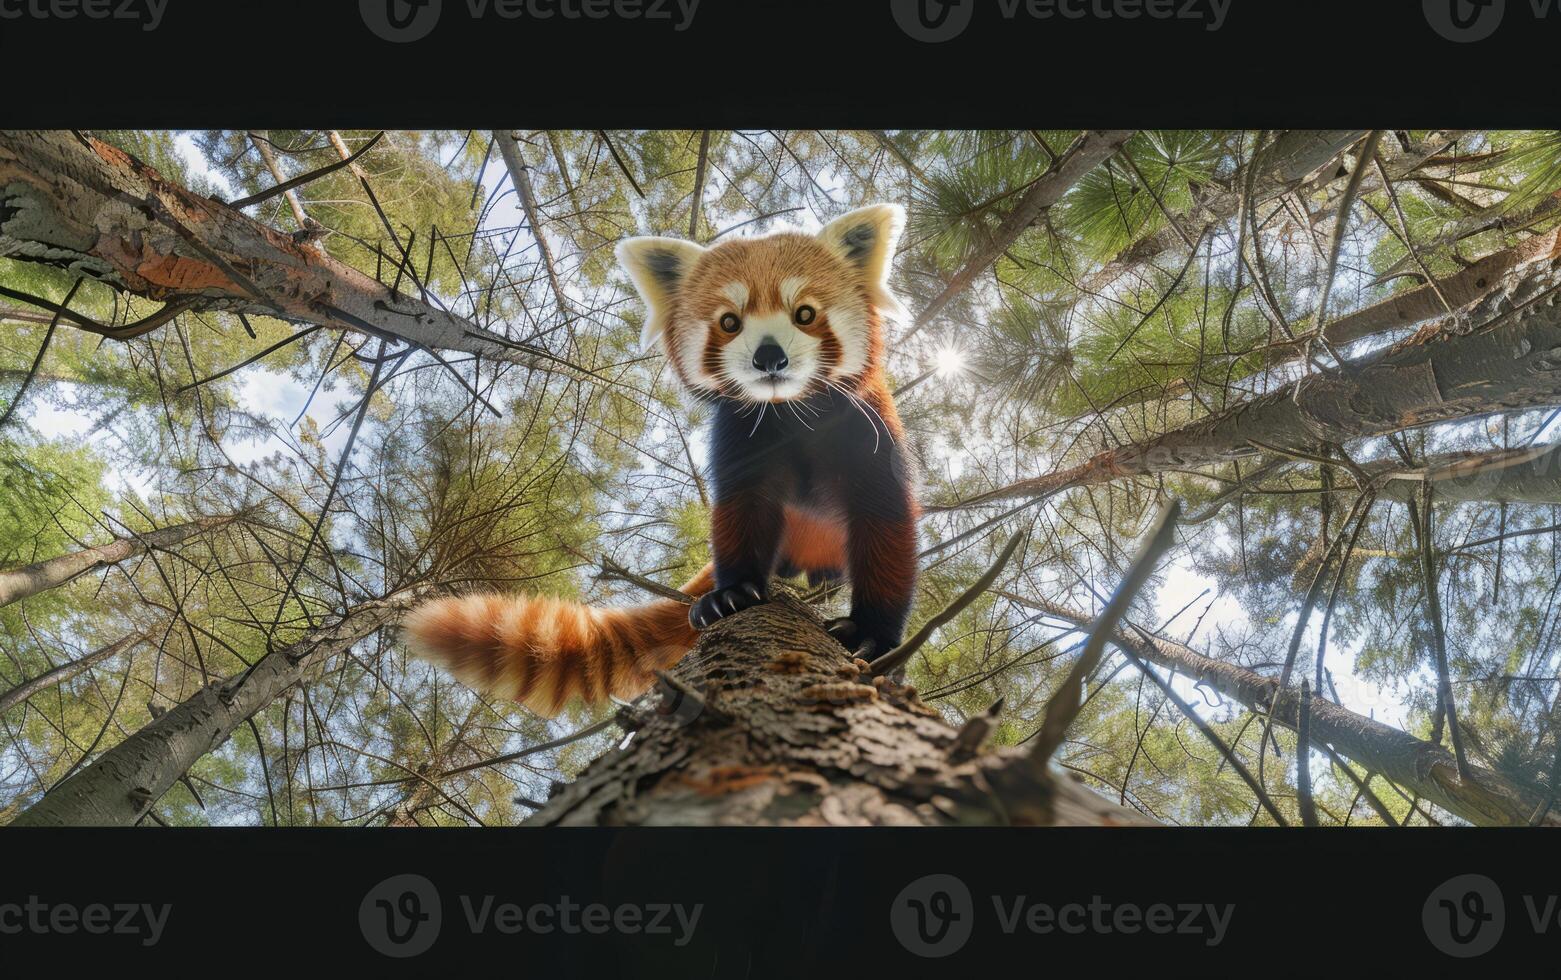 ai gegenereerd rood panda in boom foto